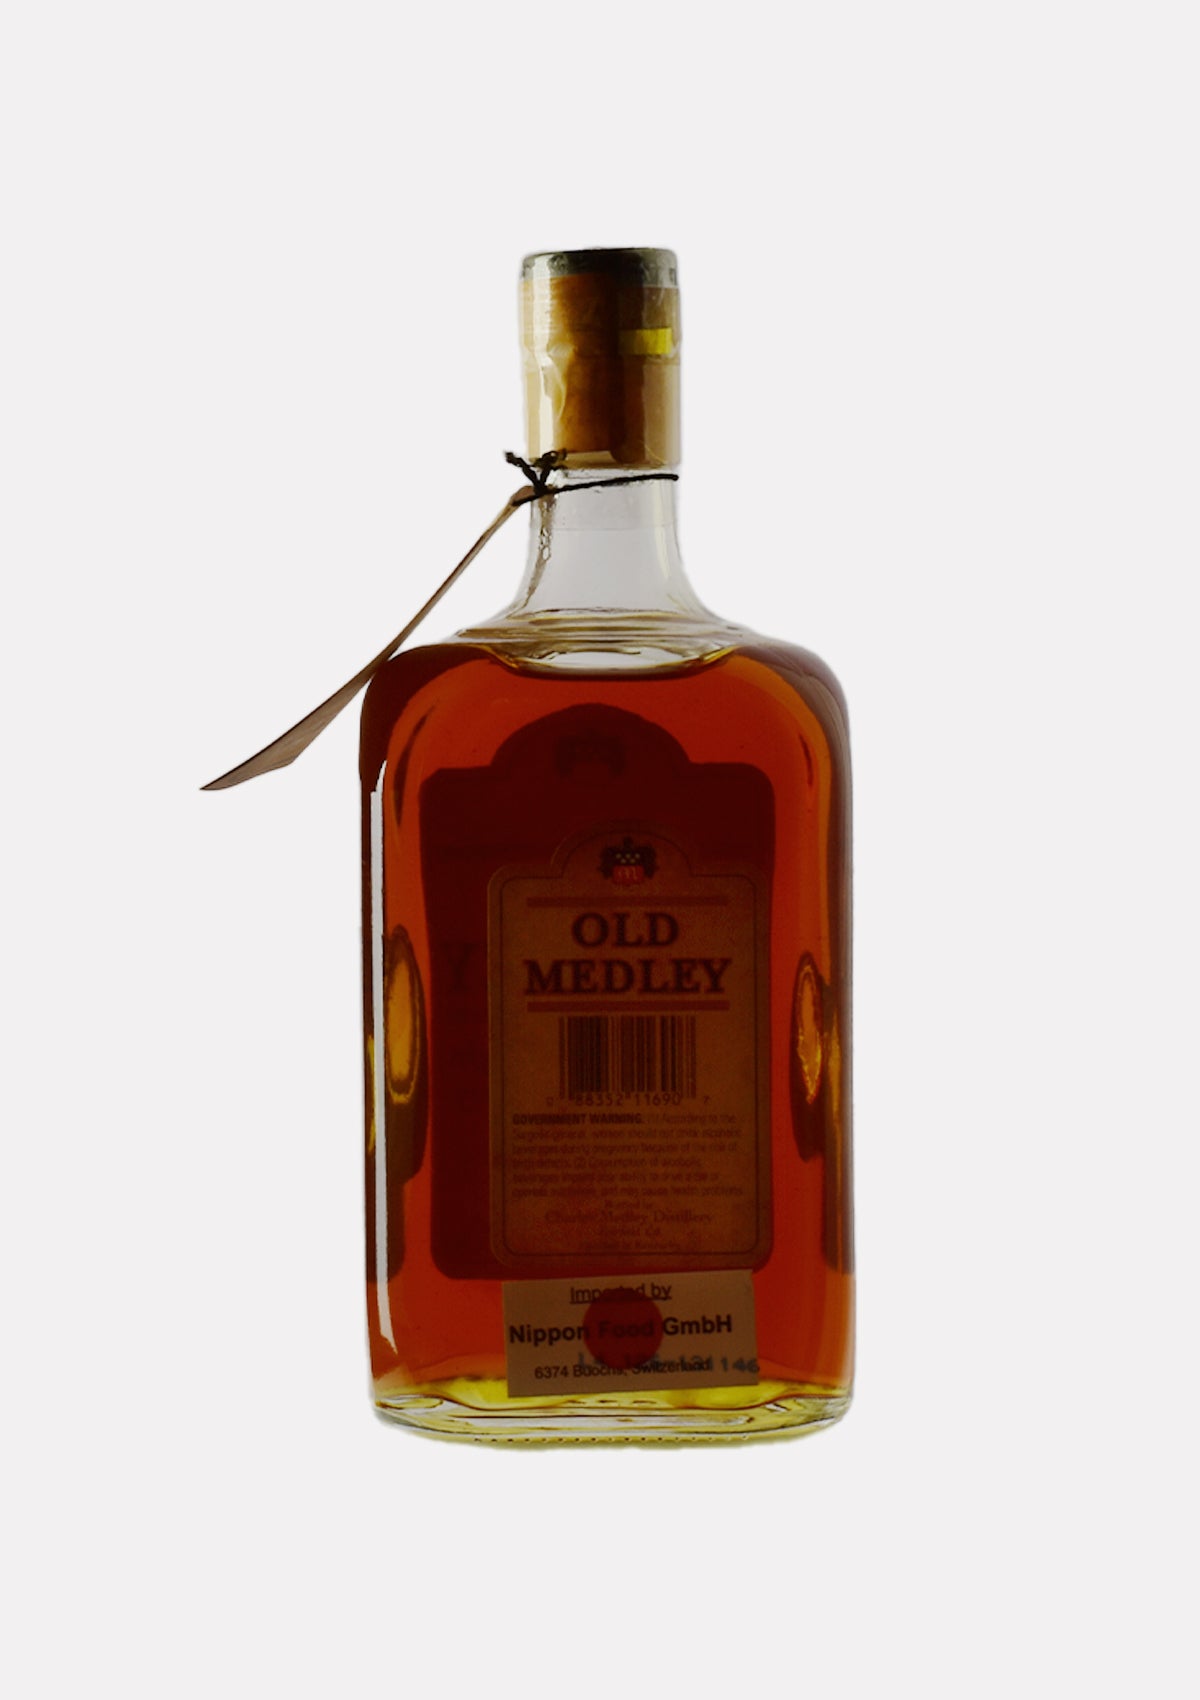 Old Medley Kentucky Straight Bourbon Whiskey 12 Jahre